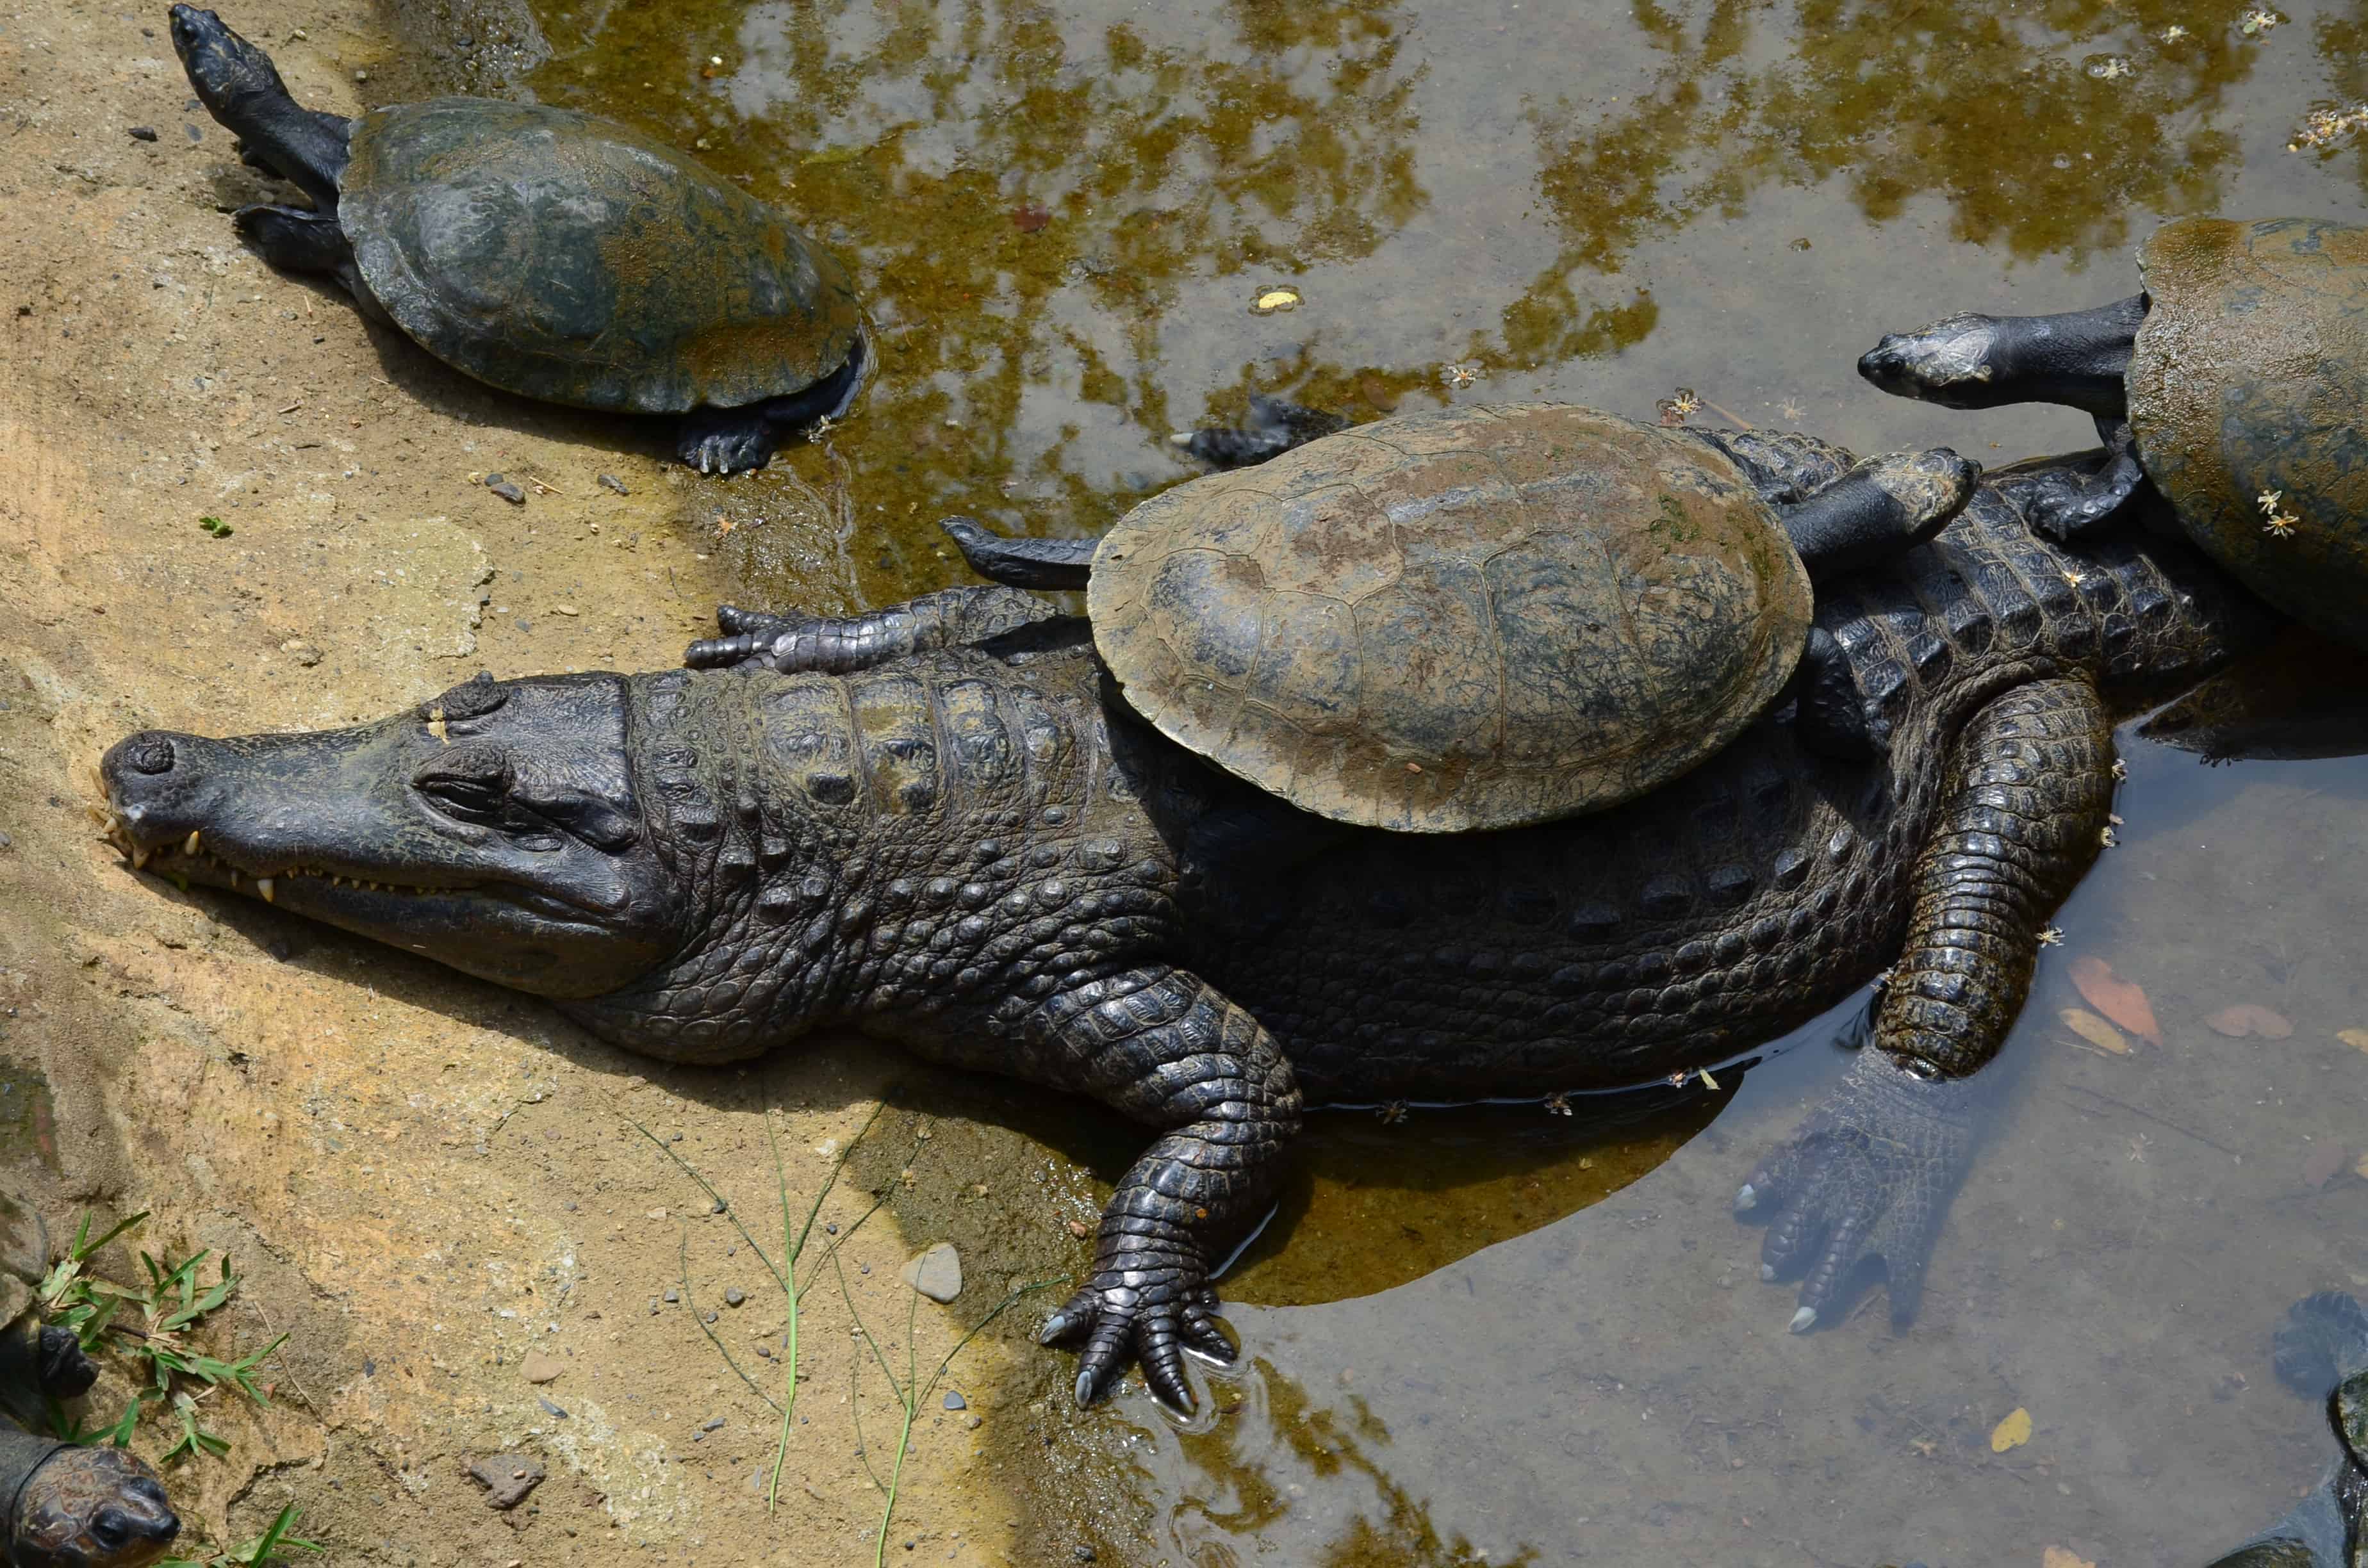 Crocodile and tortoises at the Cali Zoo in Colombia